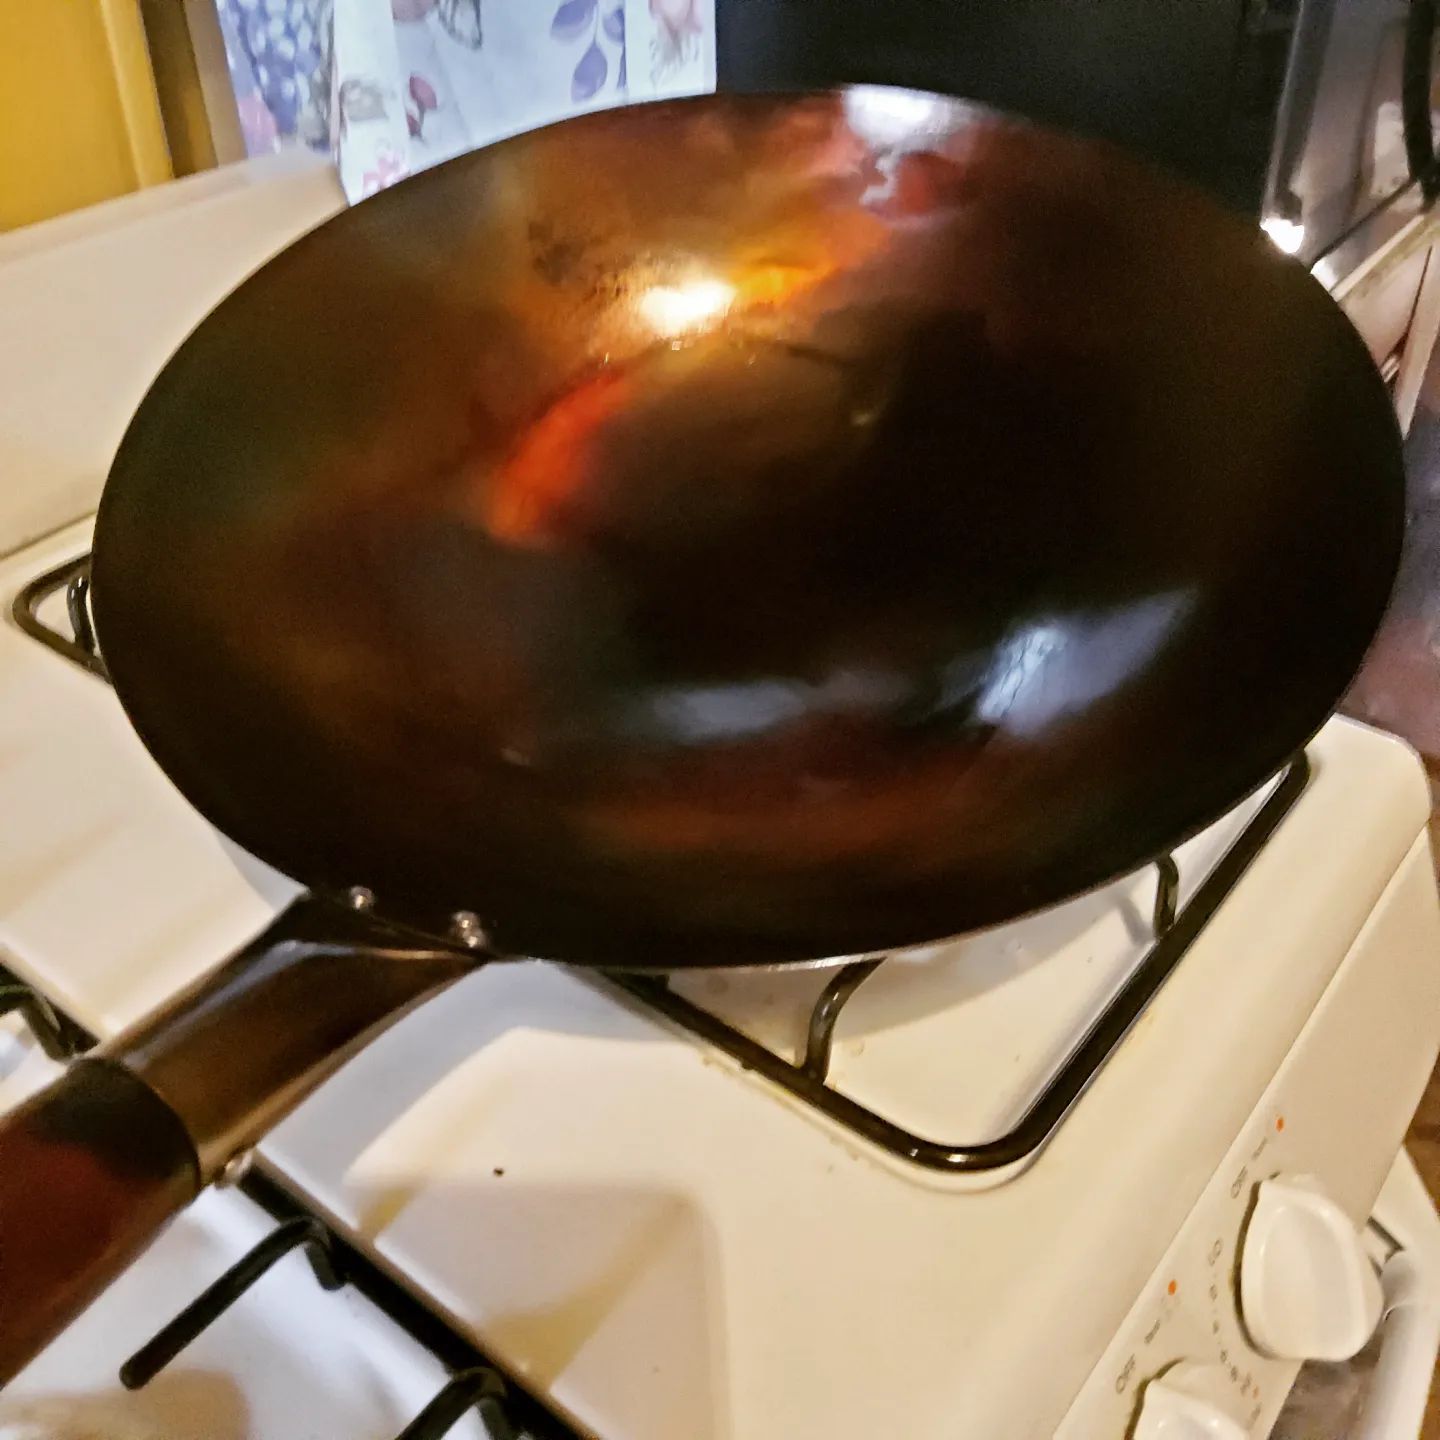 New wok who dis?

Getting my Christmas gift #seasoned and ready to use.

#wok
#season
#seasoning